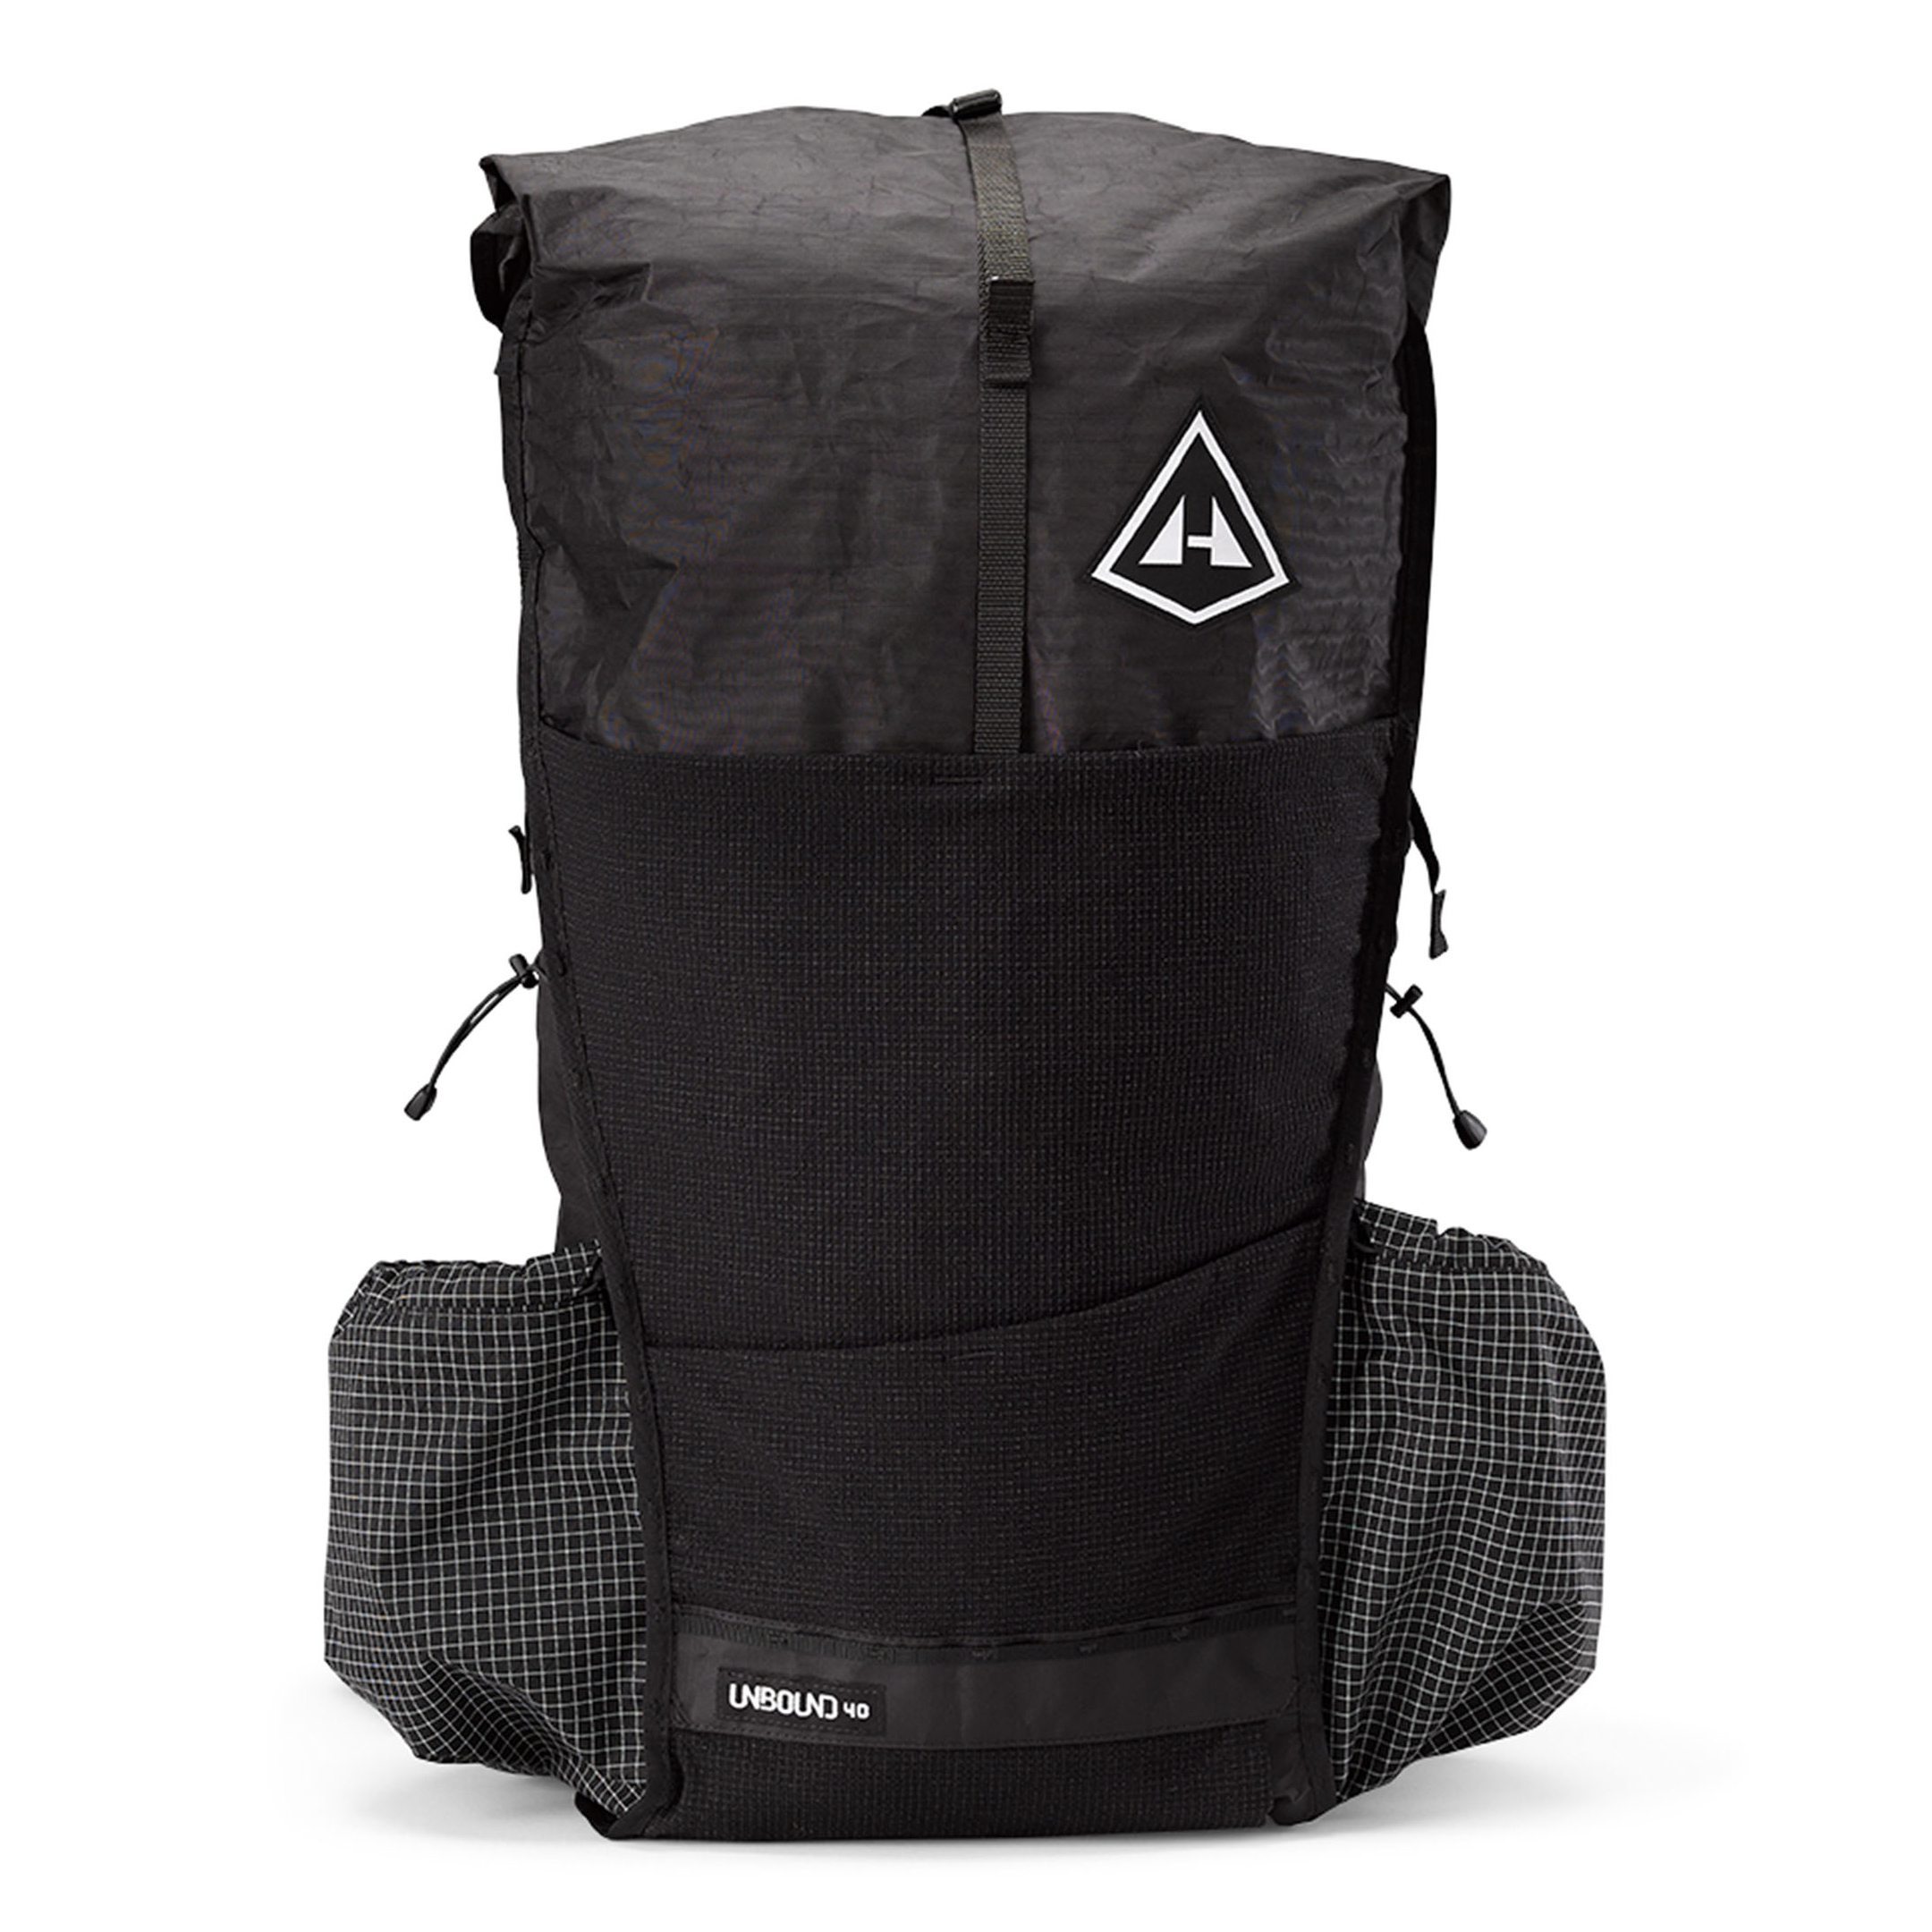 Hyperlite Mountain Gear Unbound Hiking Backpack - 40L - Black